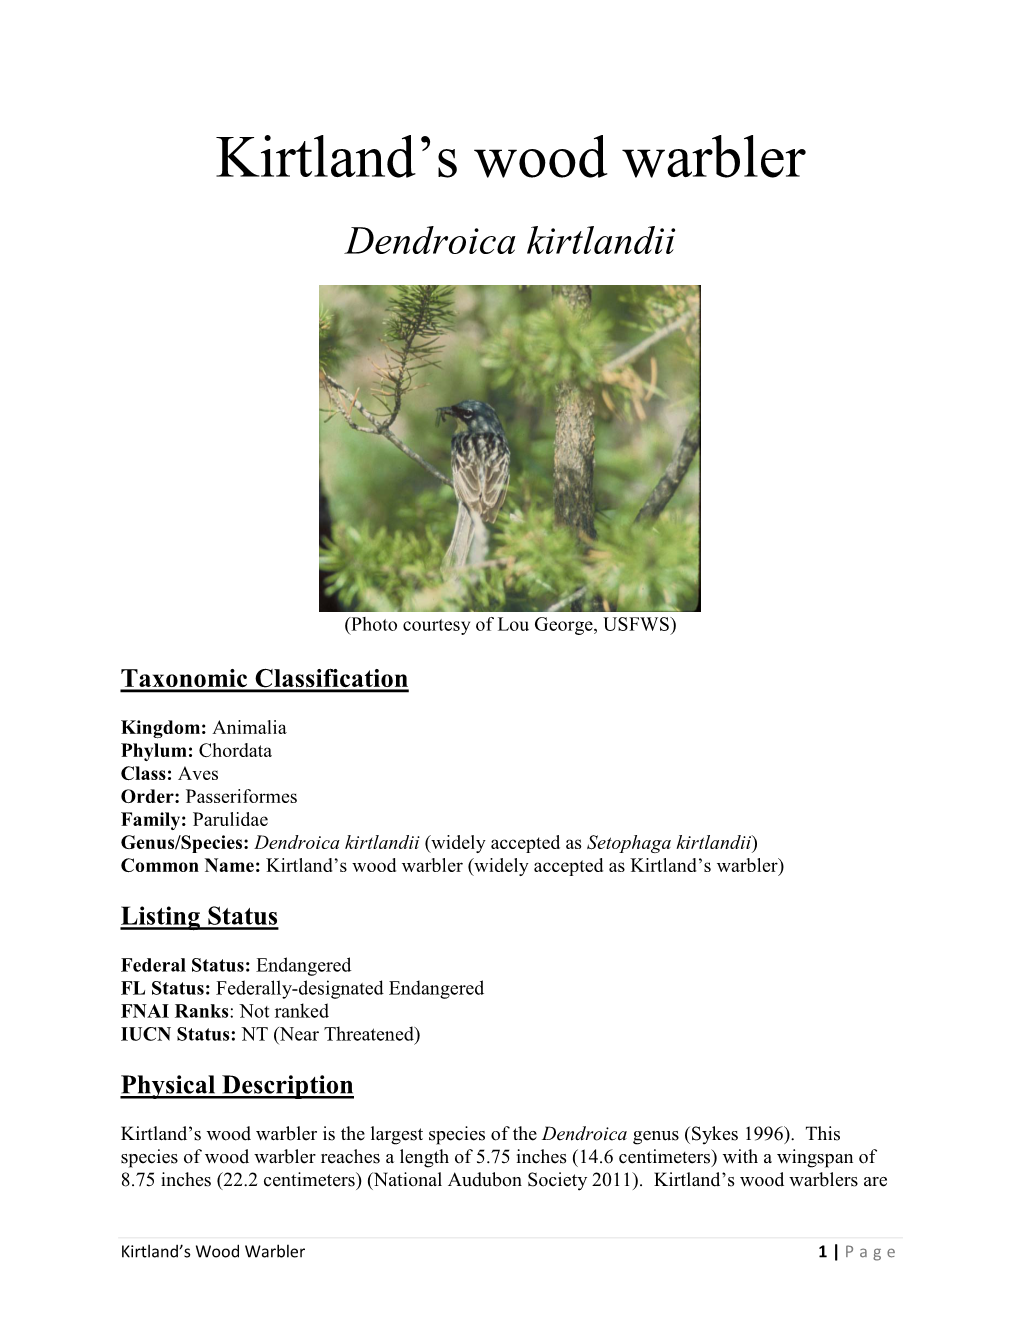 Kirtland's Wood Warbler